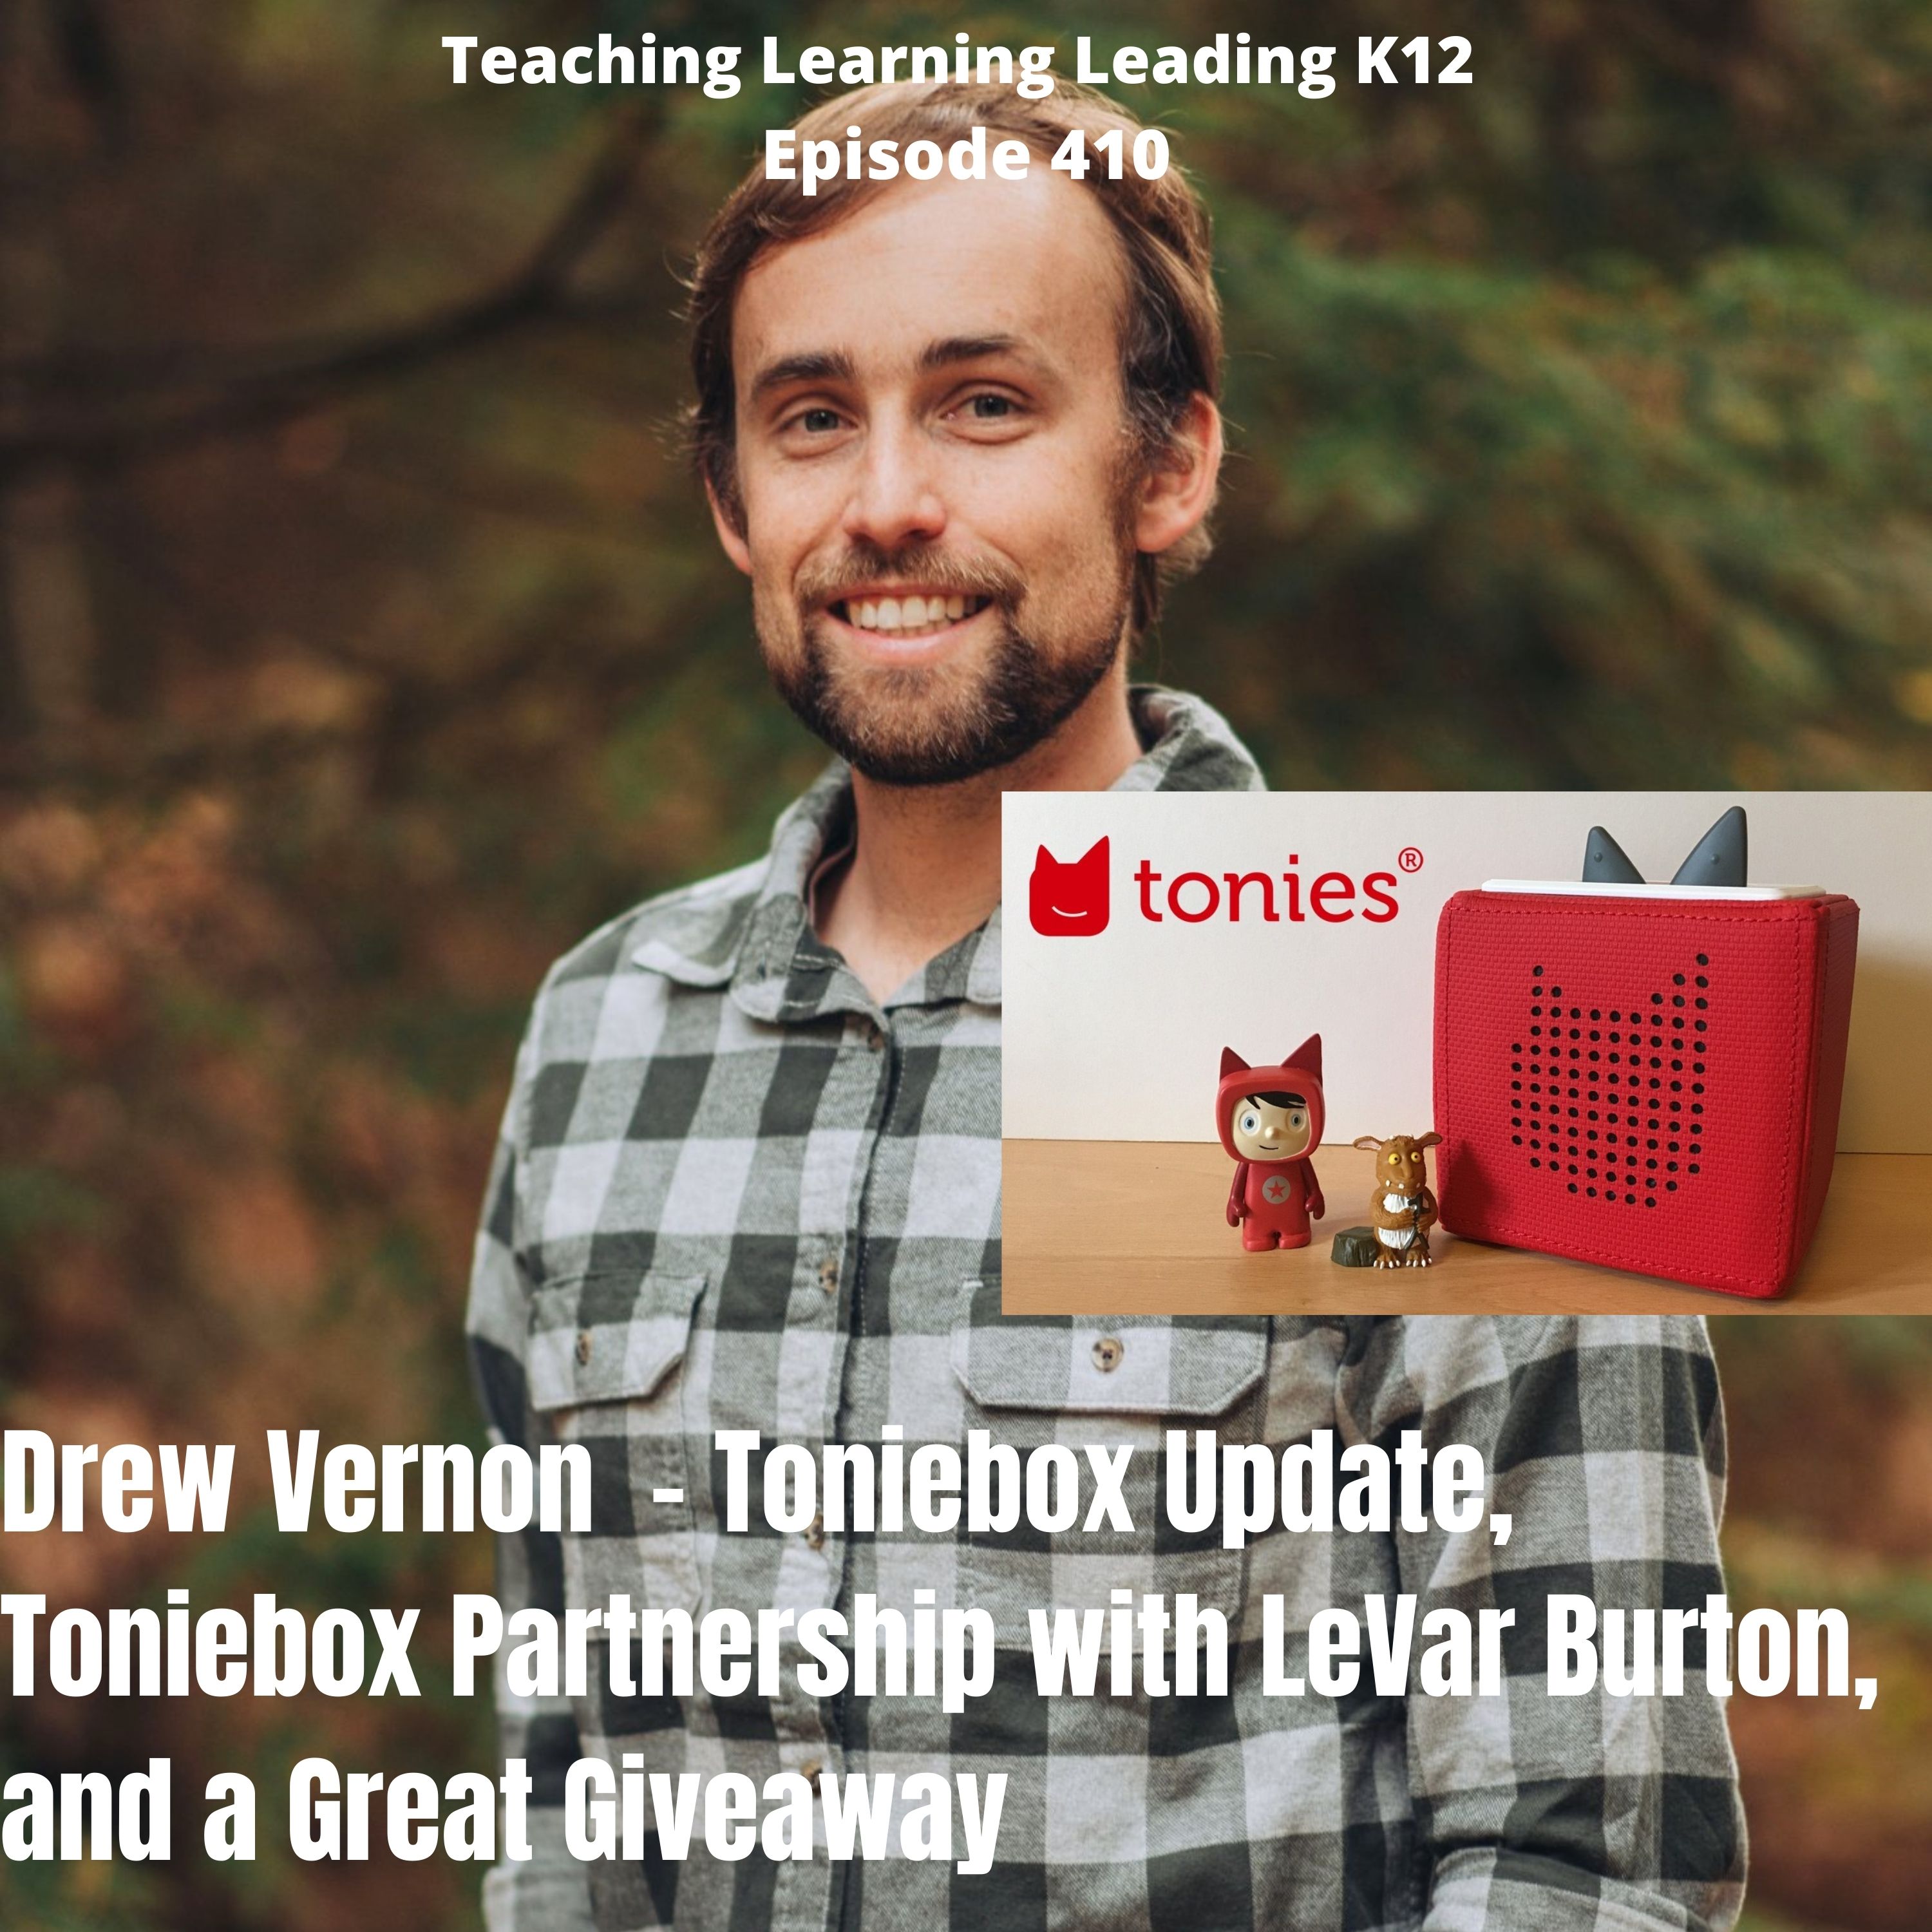 Drew Vernon - Toniebox updates, Toniebox Partnership with LeVar Burton, and a Great Giveaway - 410 Image